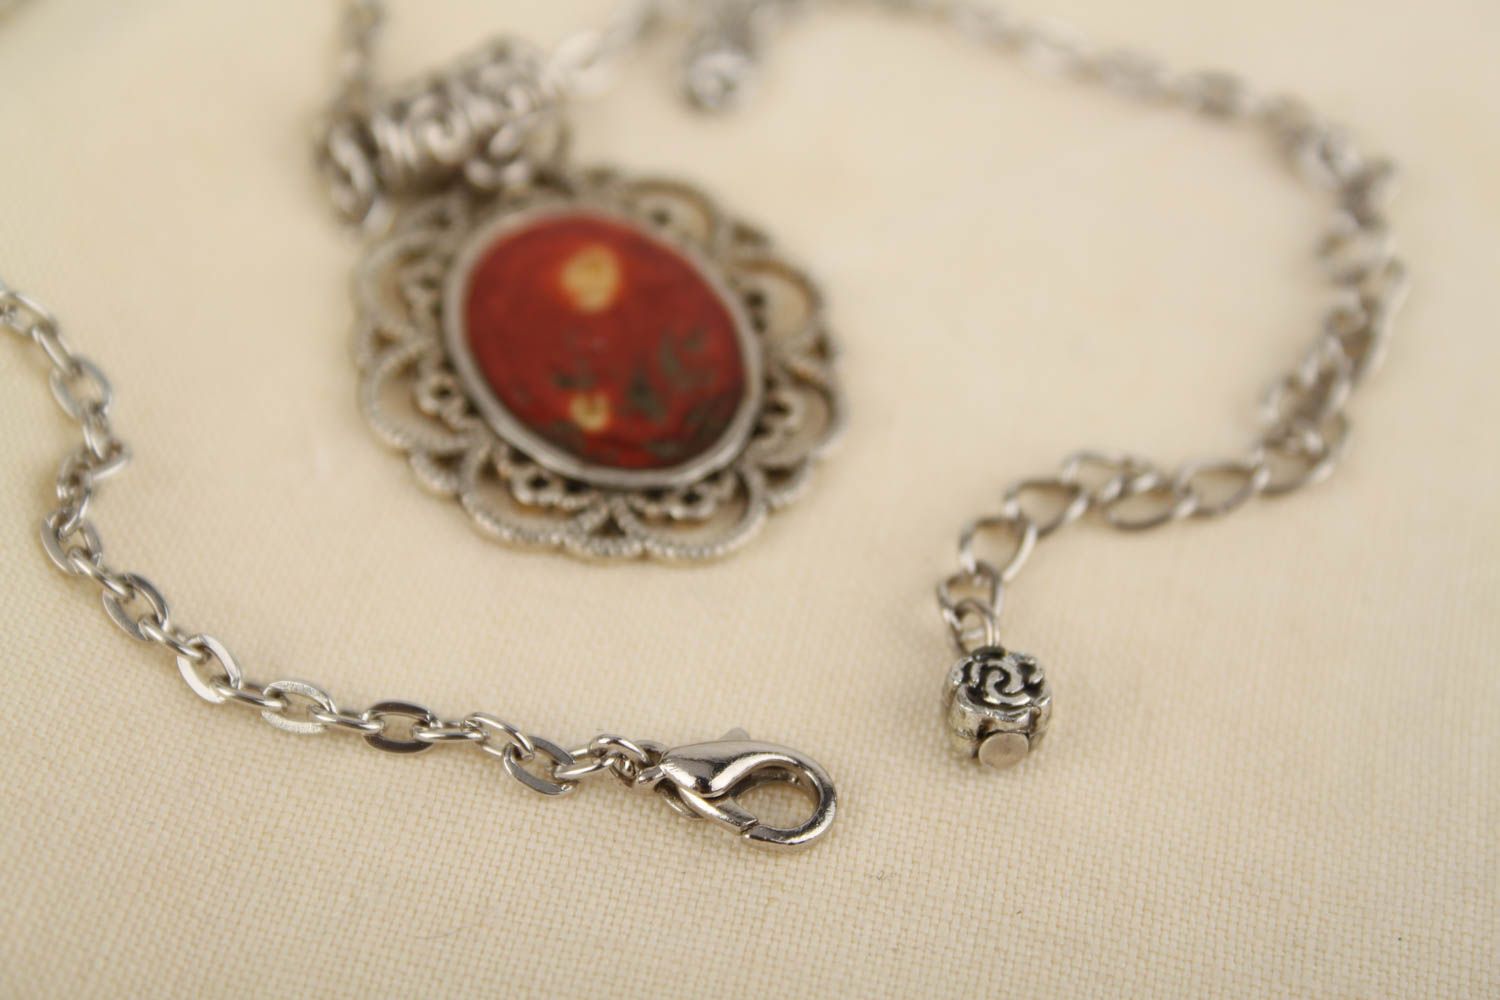 Vintage handmade metal pendant metal necklace cool neck accessories ideas photo 2